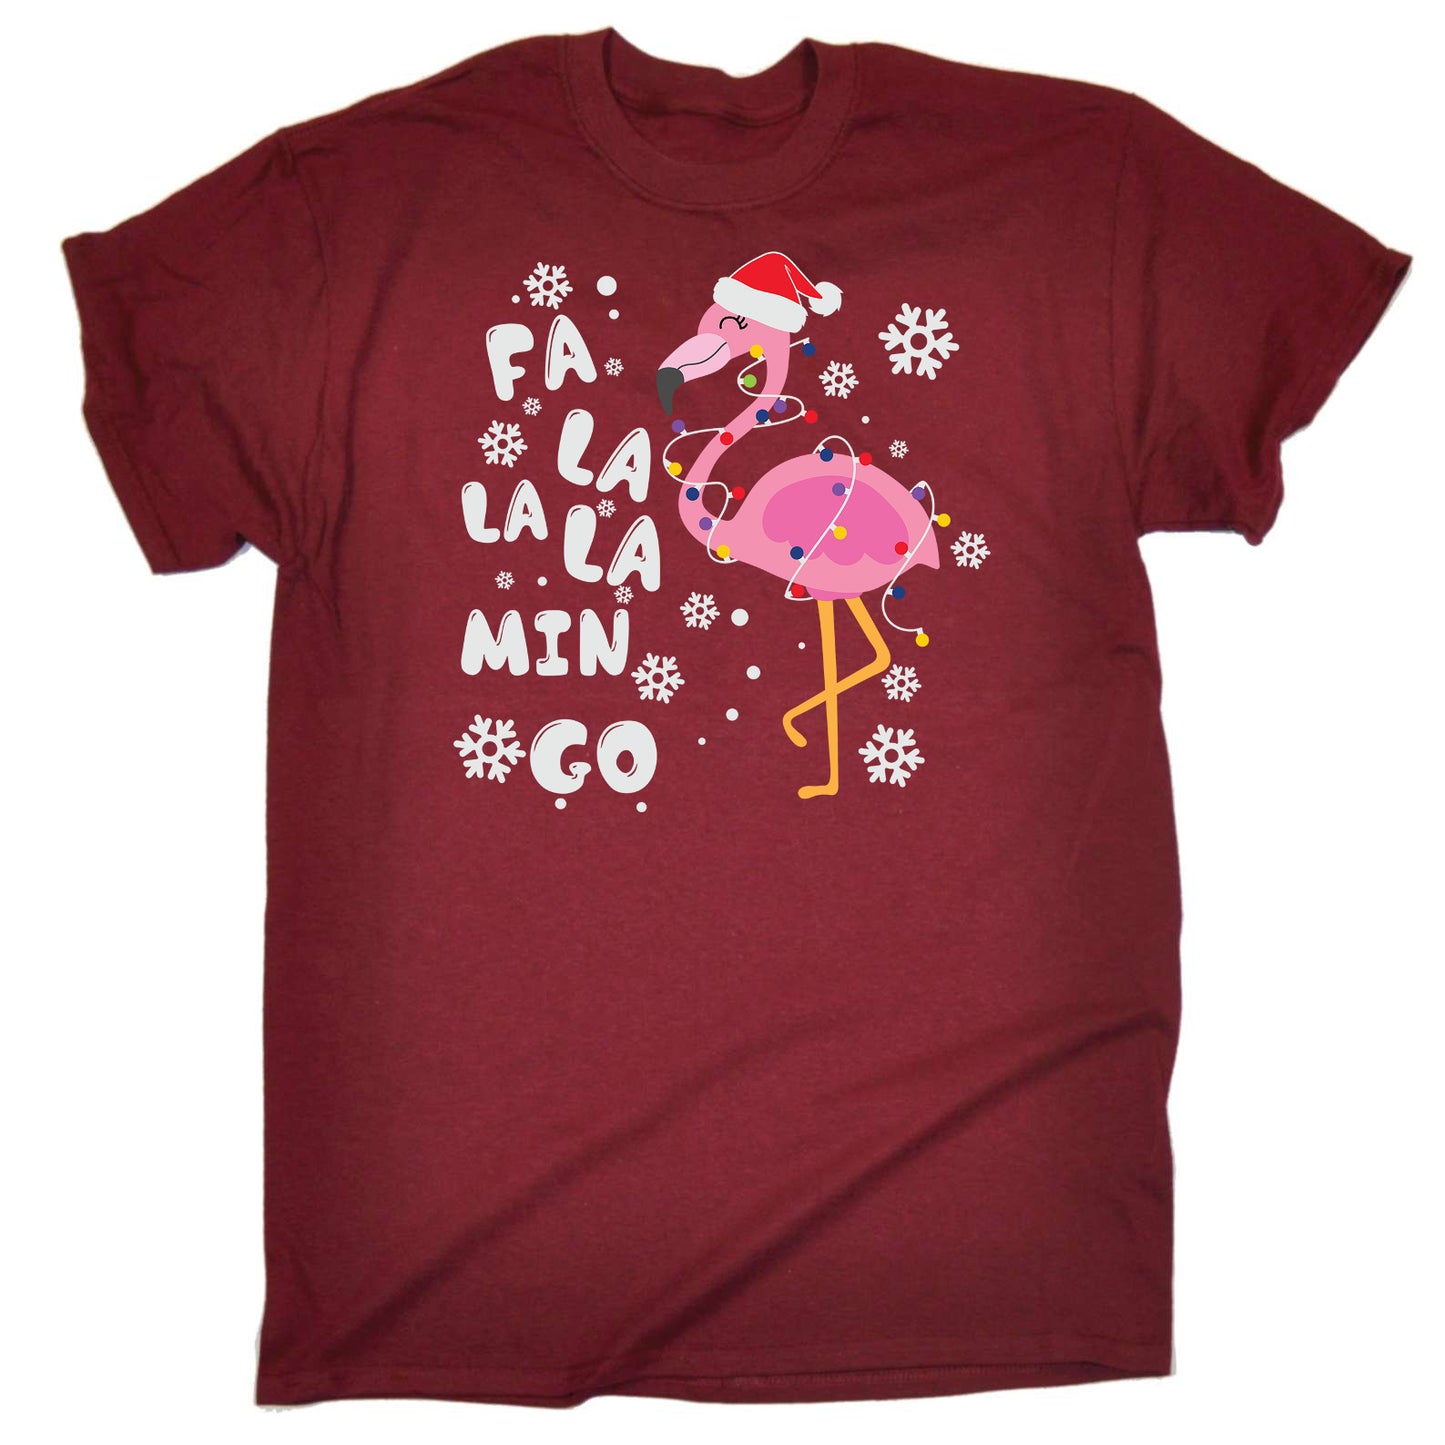 Fa La La Min Go Flamingo Christmas Xmas Bird Animal - Mens Funny T-Shirt Tshirts